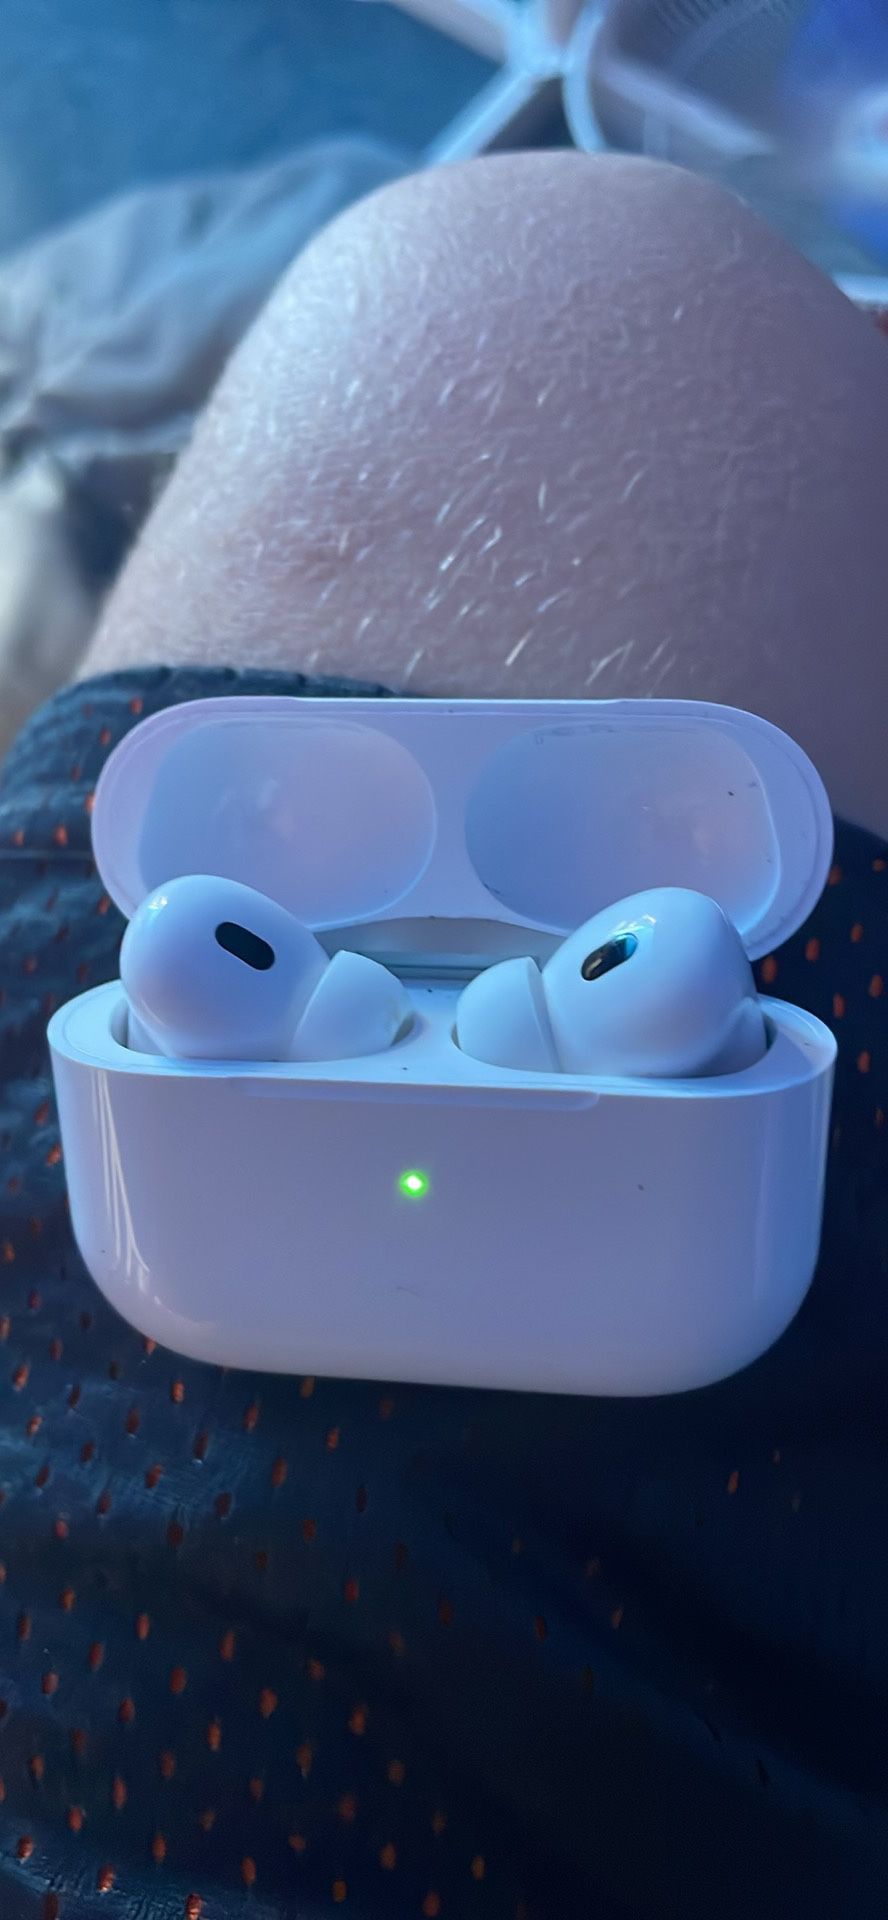 Apple Airpod Pros  Second Generation